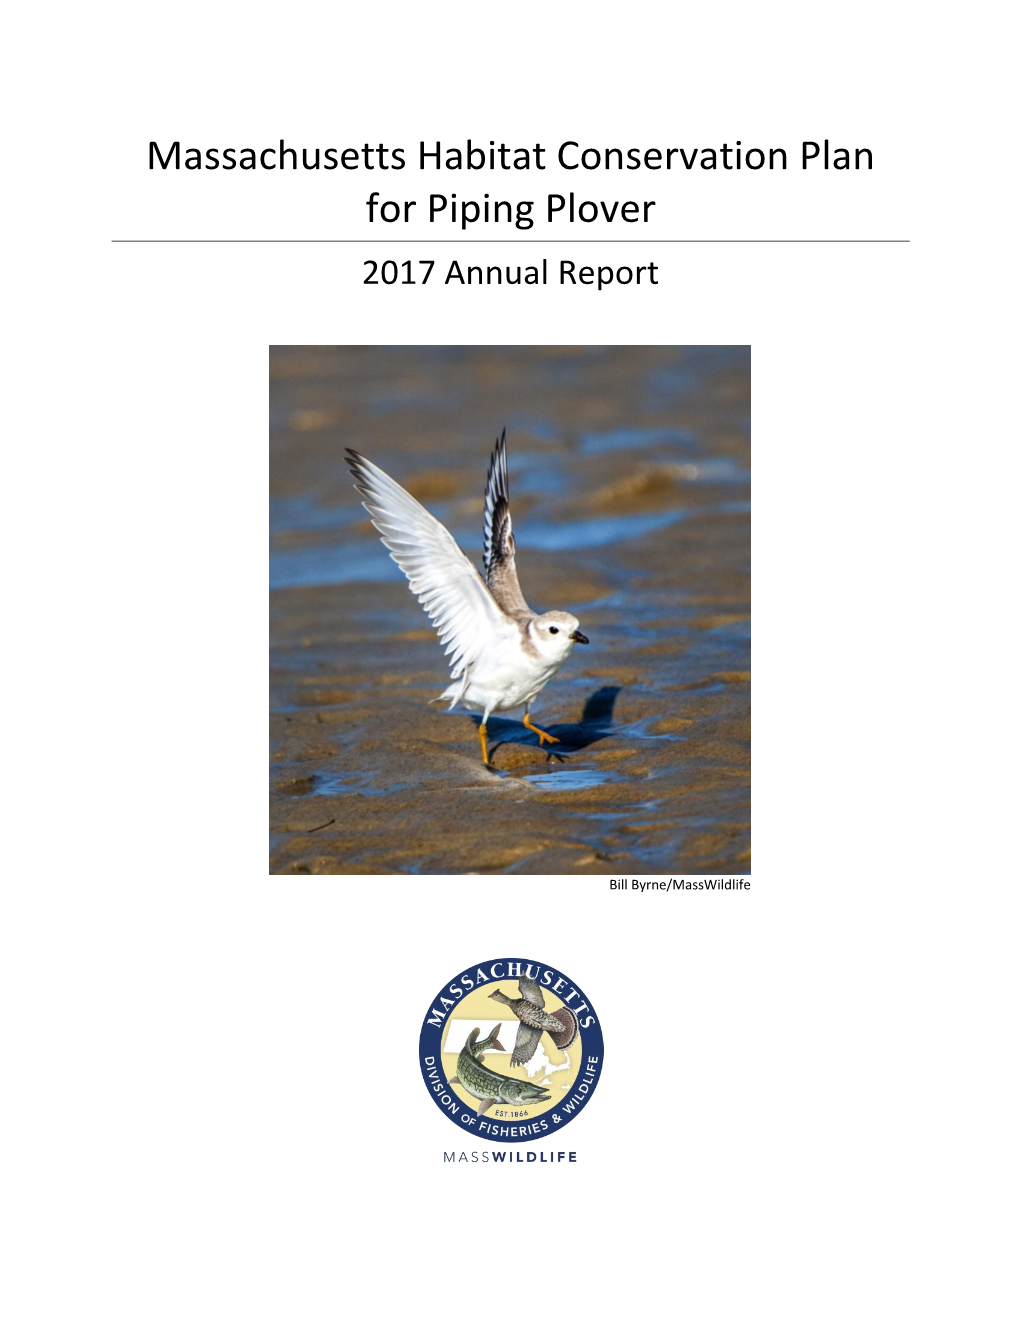 Massachusetts Habitat Conservation Plan for Piping Plovers, 2017